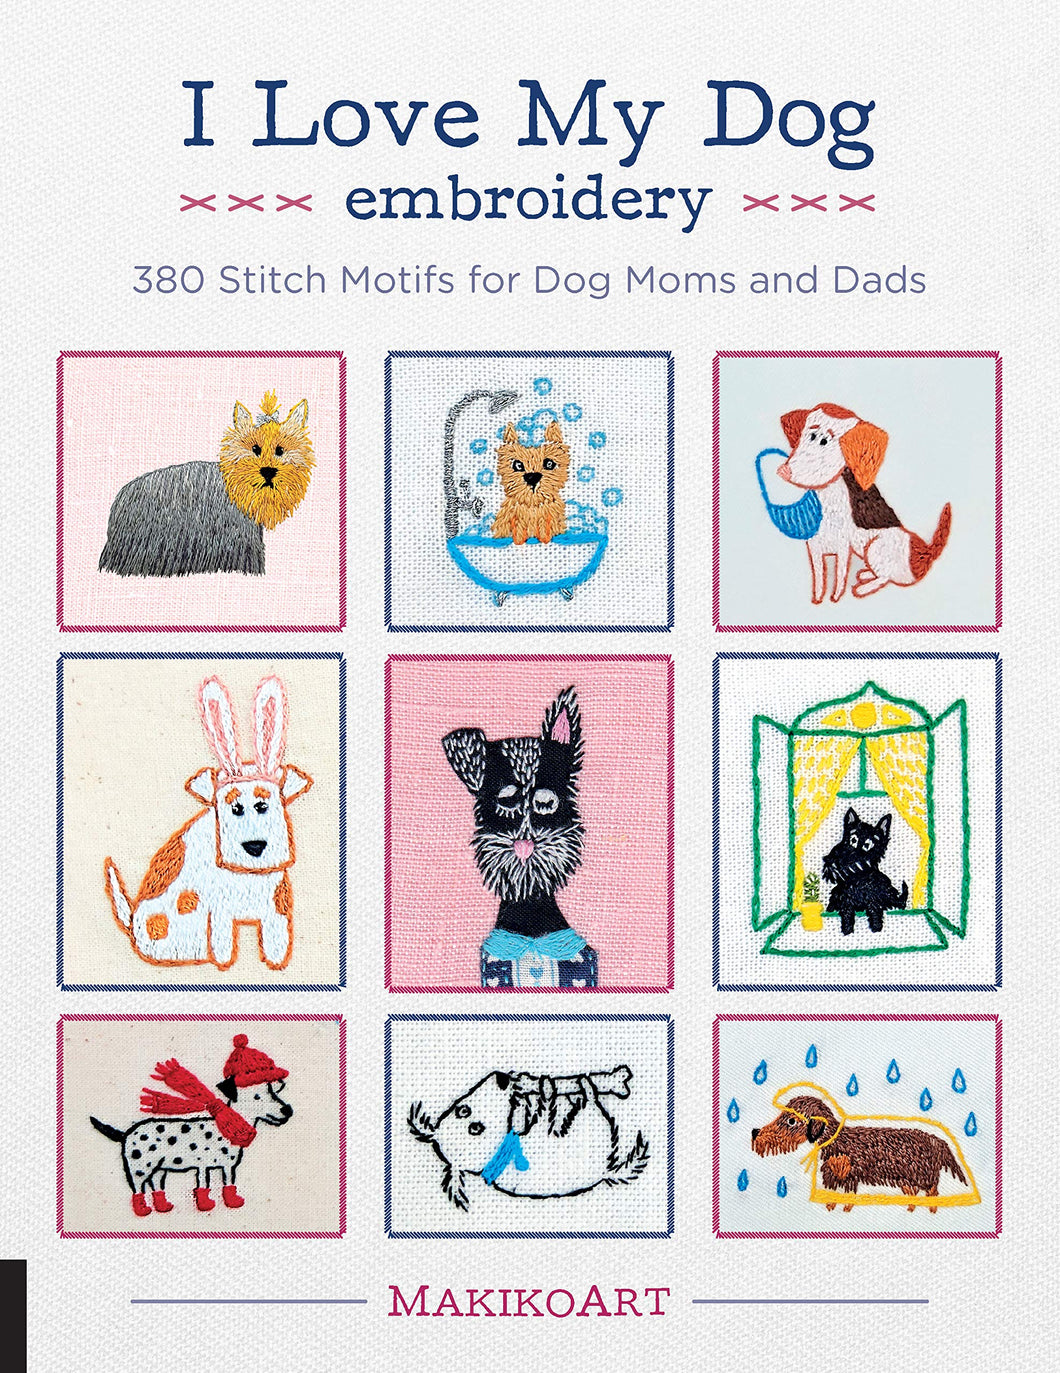 I Love My Dog Embroidery - 380 Stitch Motifs